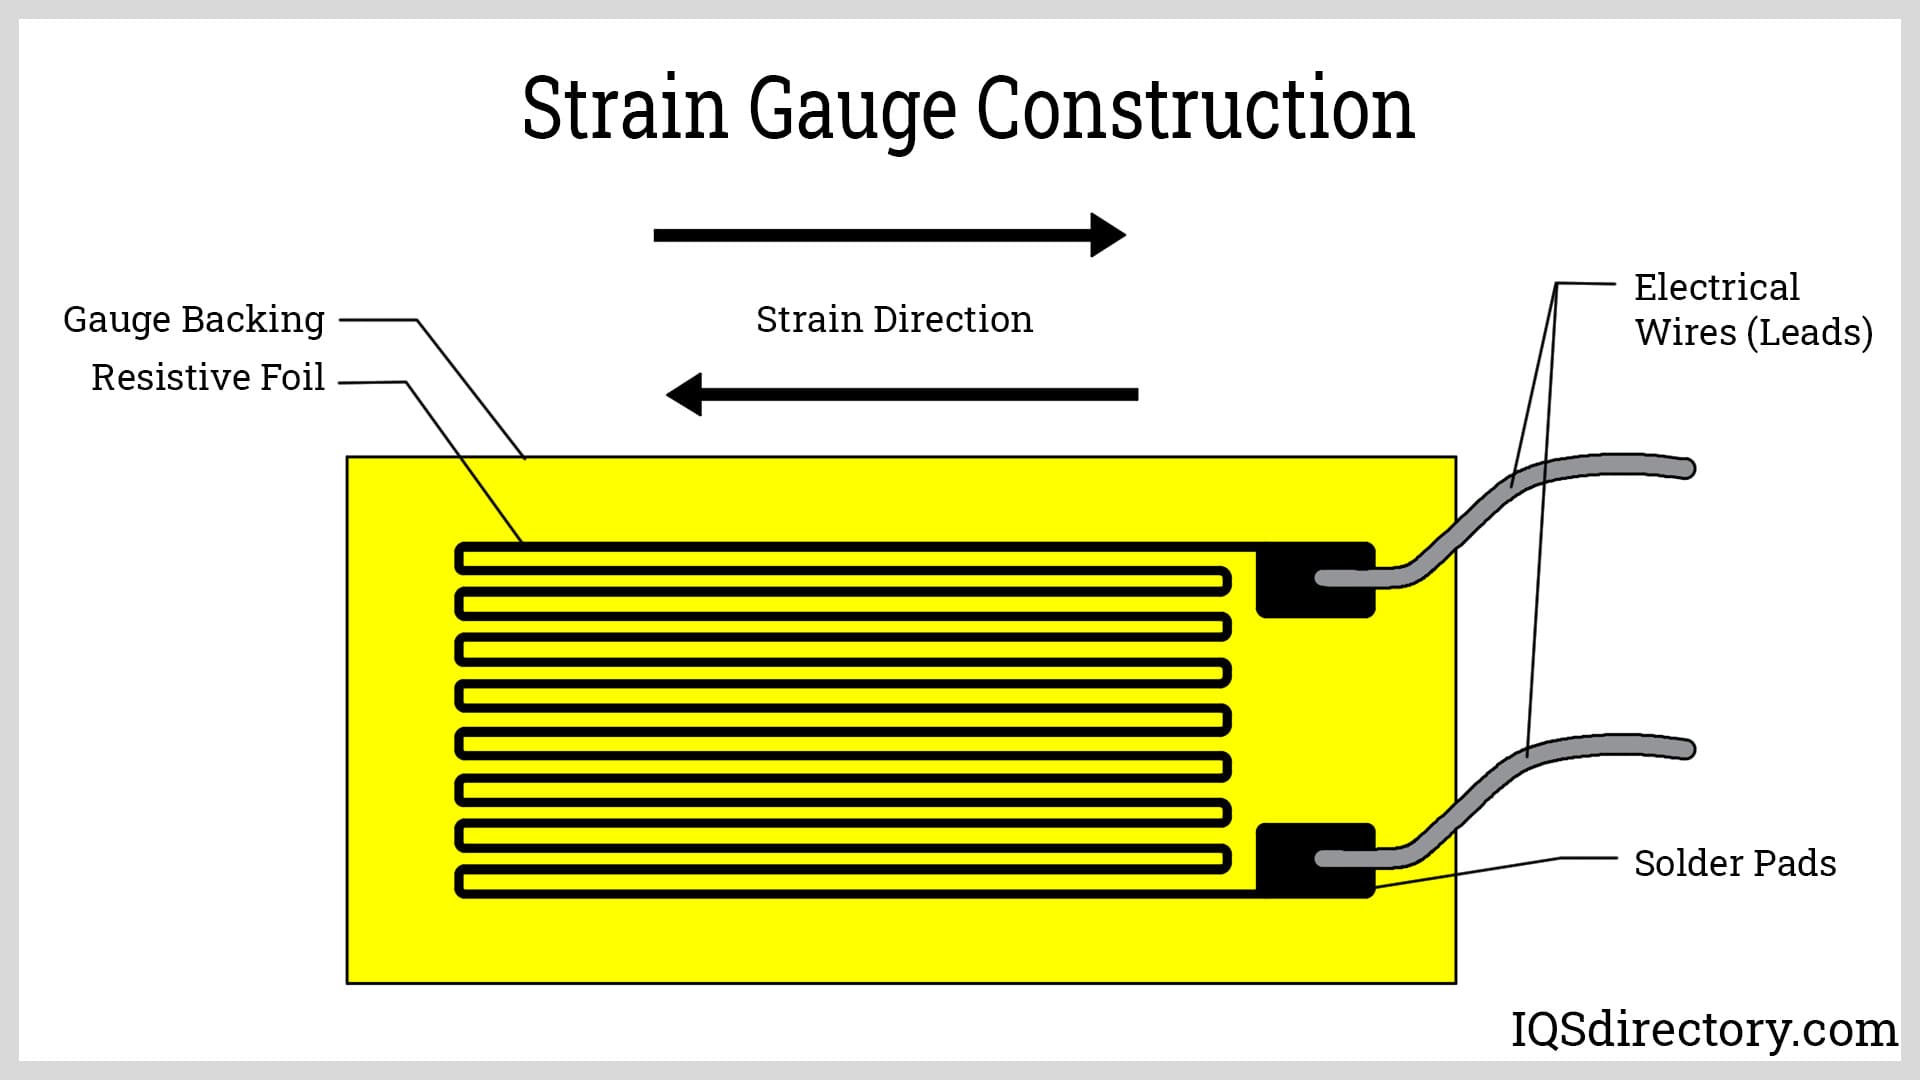 Strain Gauge Construction